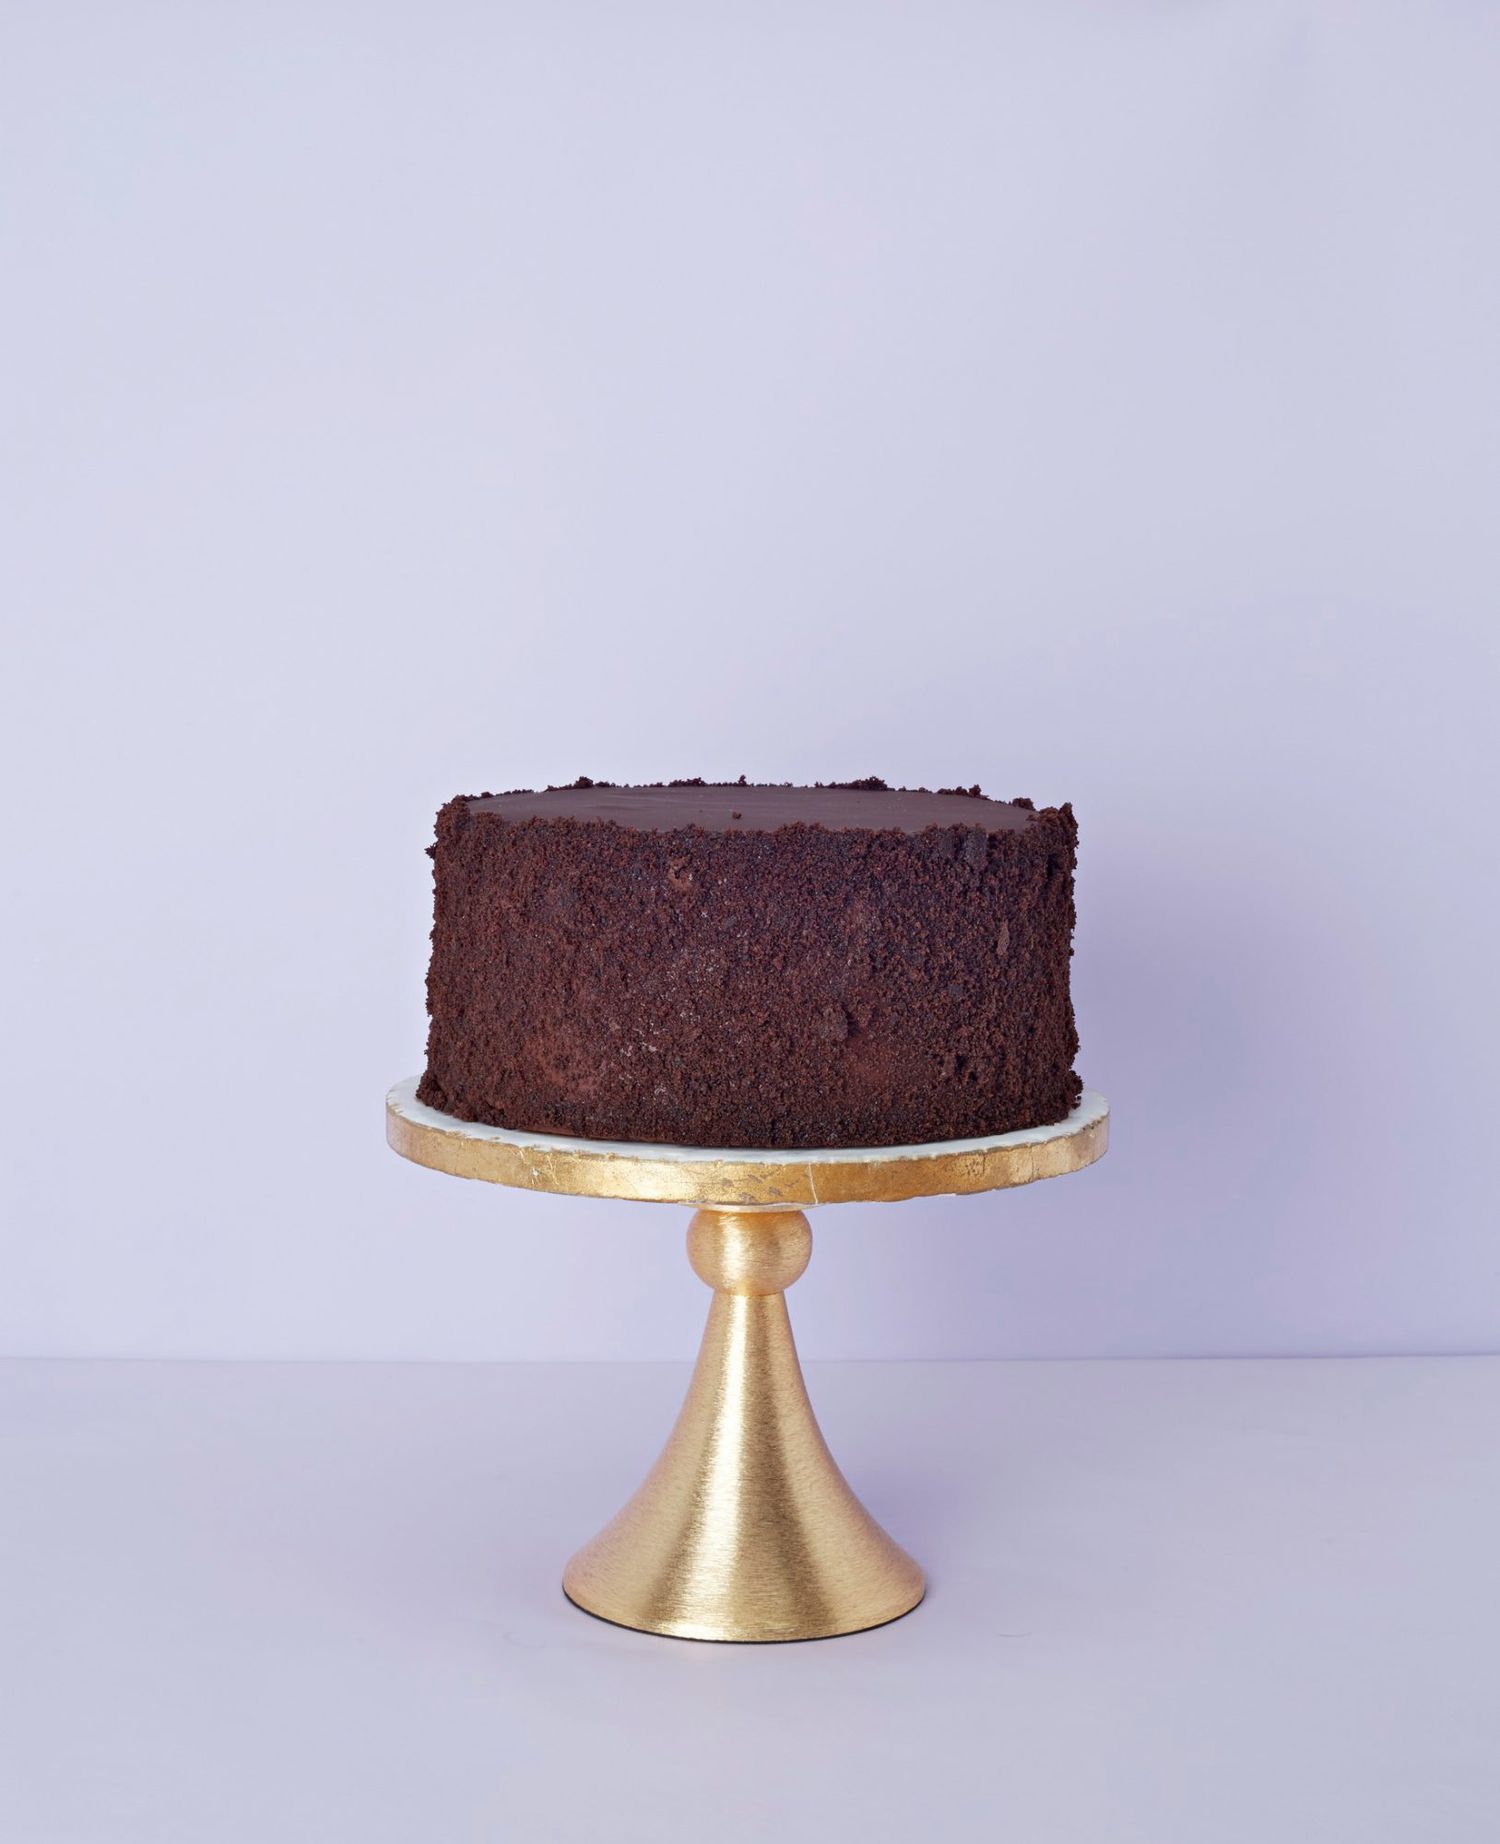 cake stand